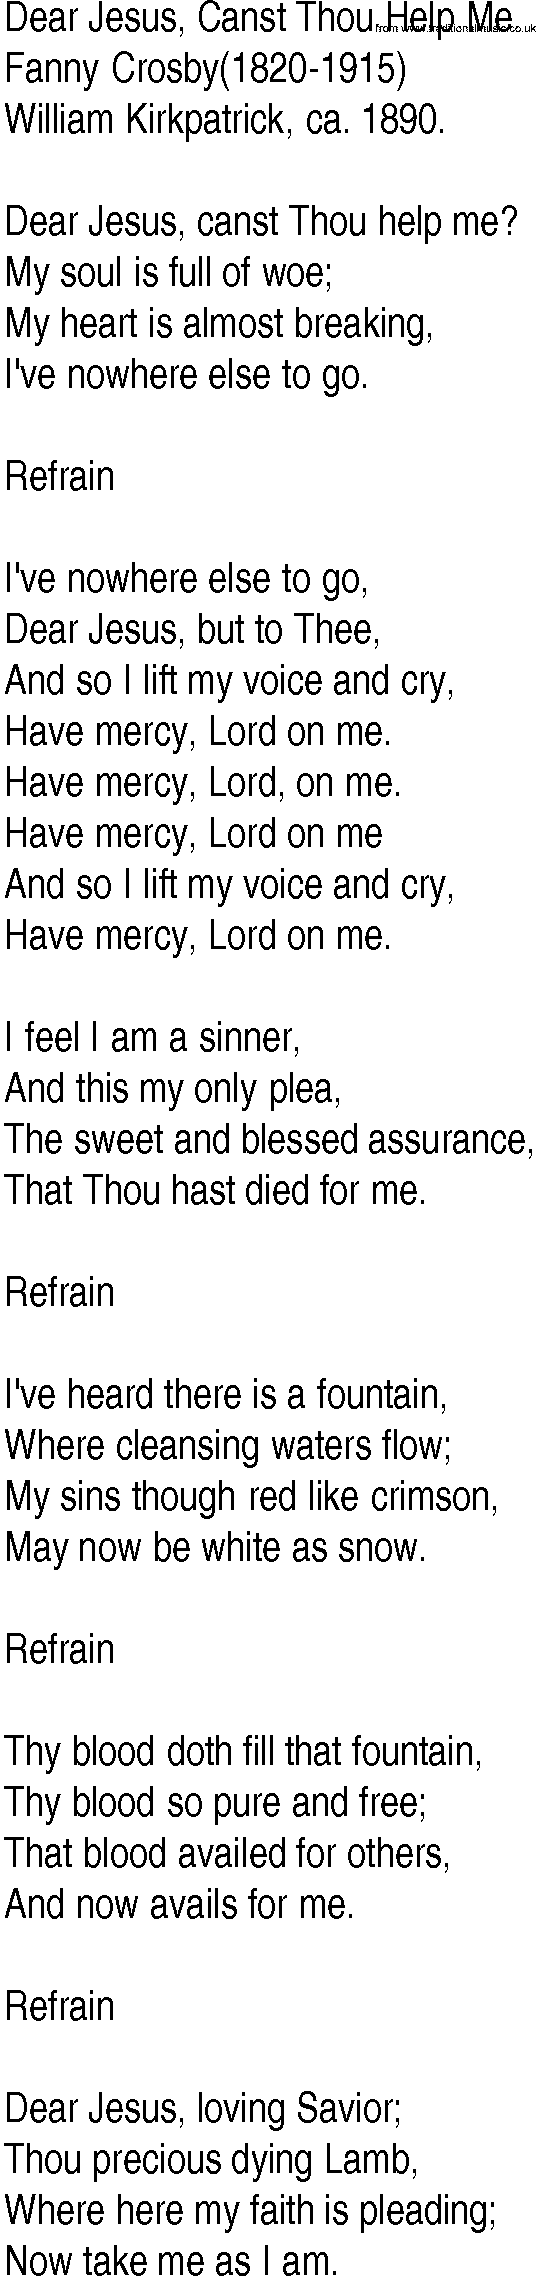 Hymn and Gospel Song: Dear Jesus, Canst Thou Help Me by Fanny Crosby lyrics